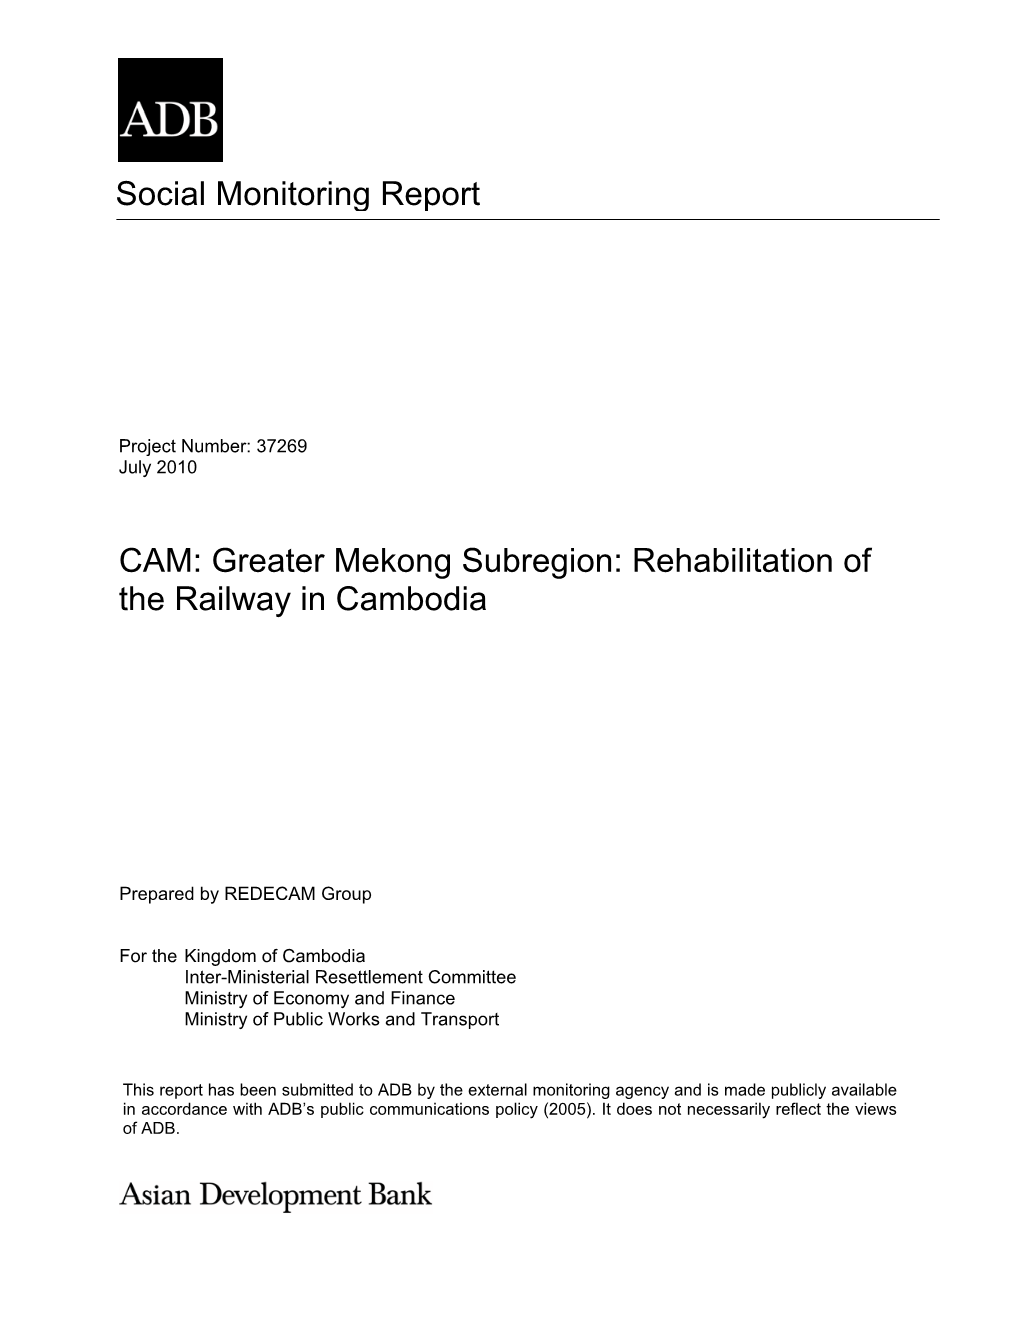 Greater Mekong Subregion: Rehabilitation of the Railway in Cambodia